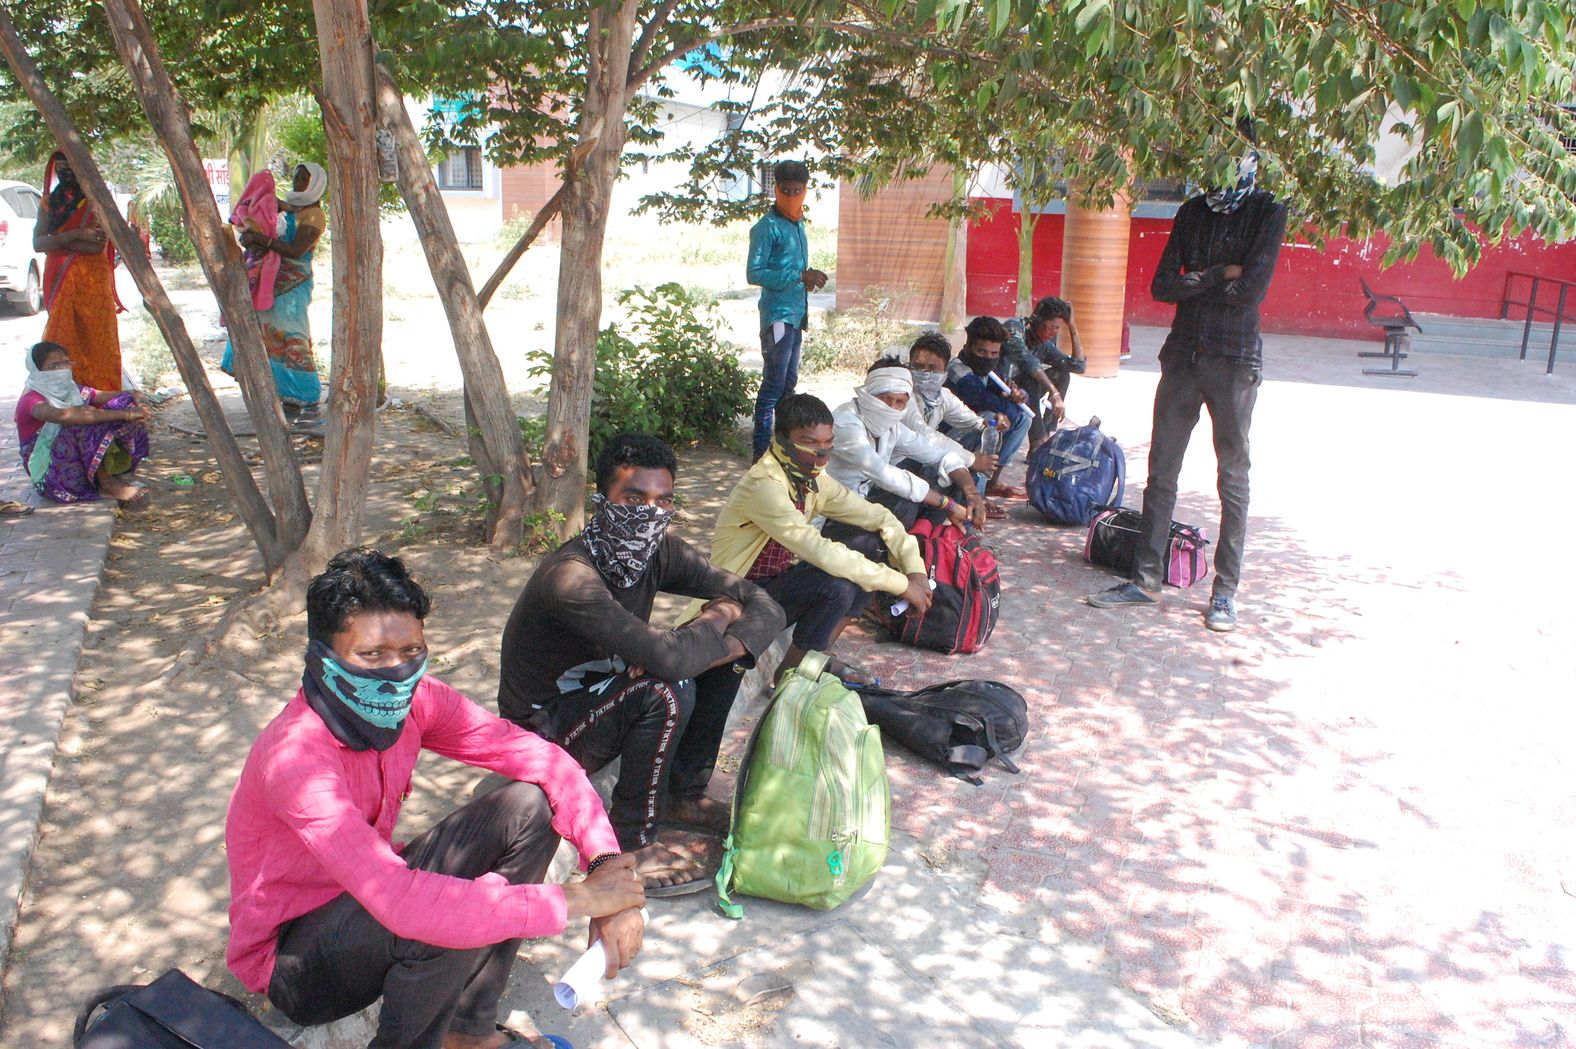  Hotel workers reach Burhanpur from Shirdi walking 292 km